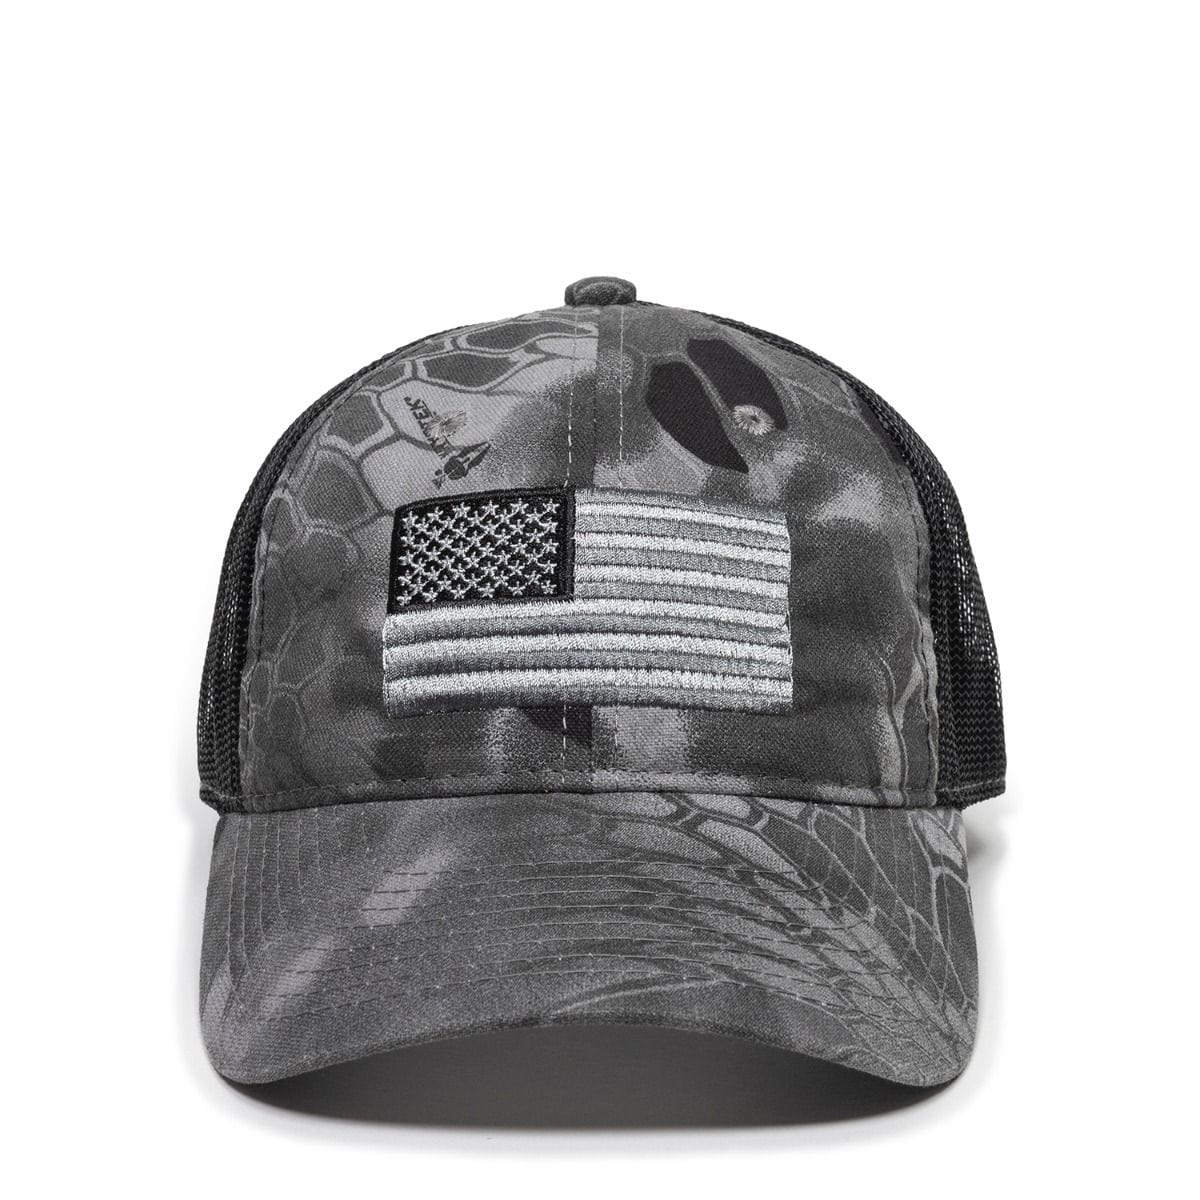 Accessories & Gear Kryptek Black Raid US Flag Unstructured Fishing Hat